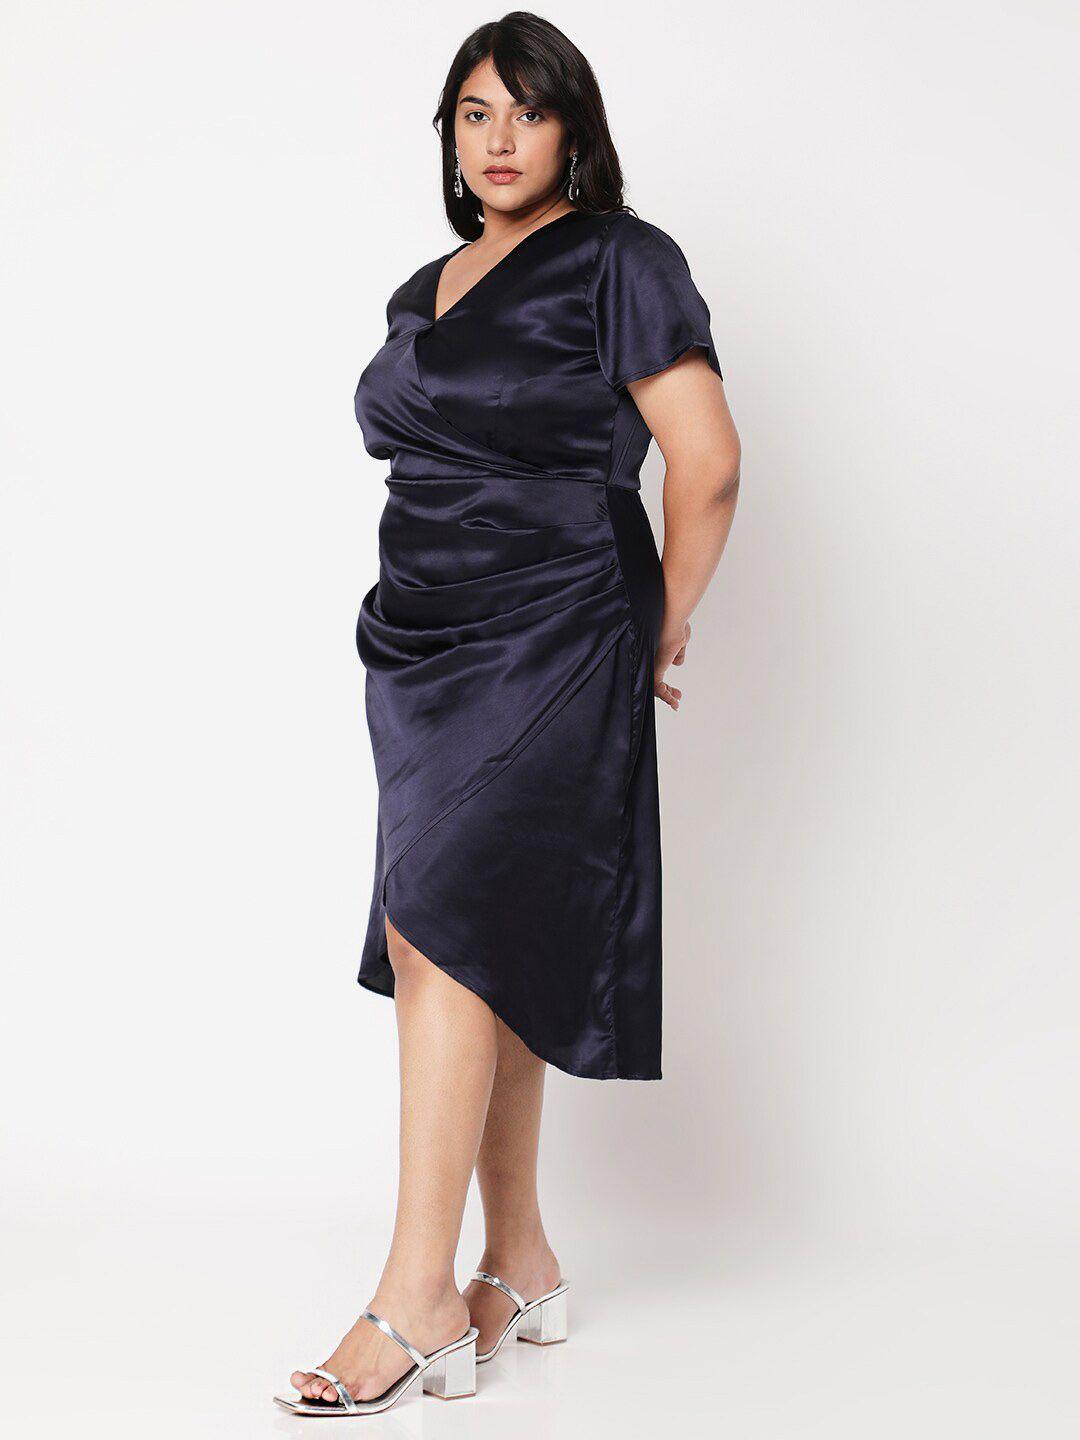 curves by mish navy blue plus size wrap dress